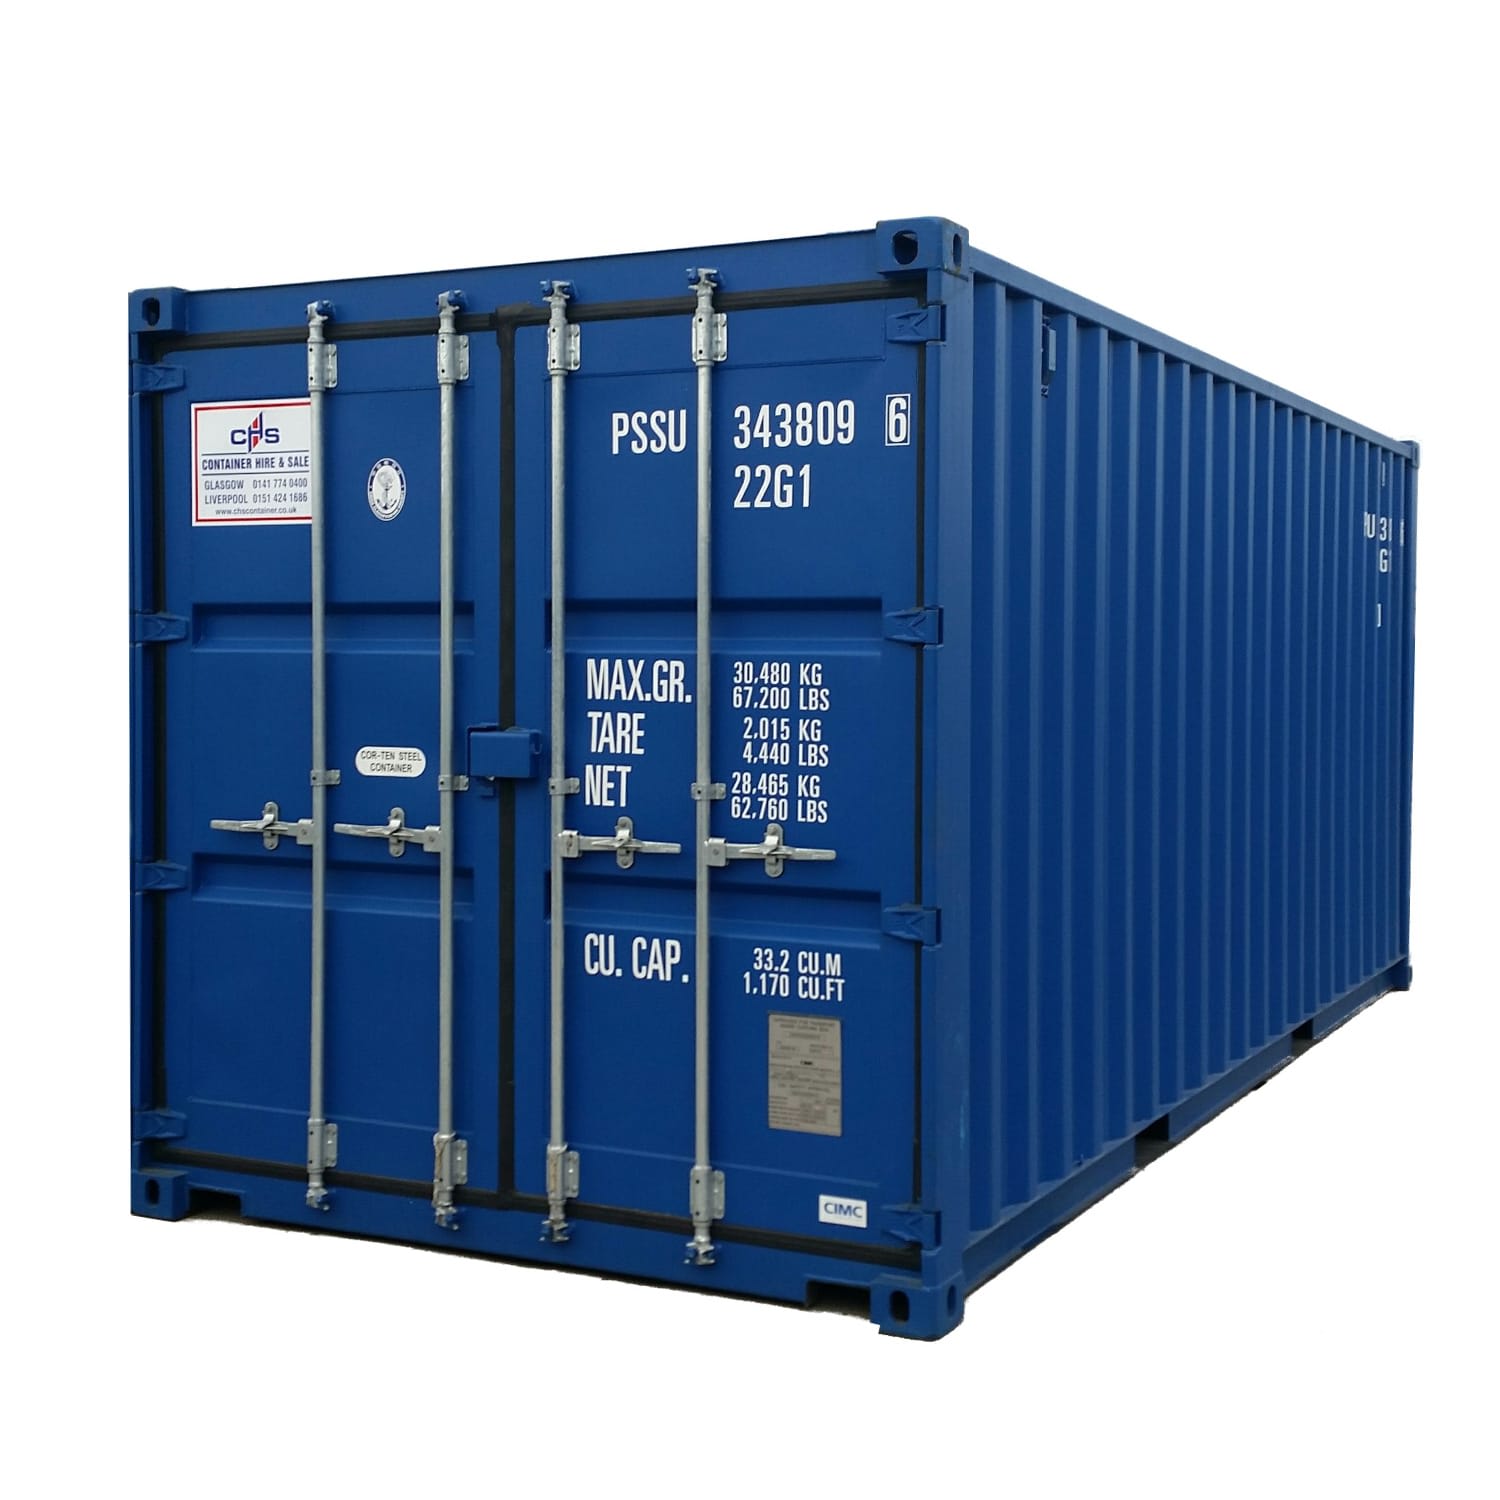 Images Container Hire Services Ltd